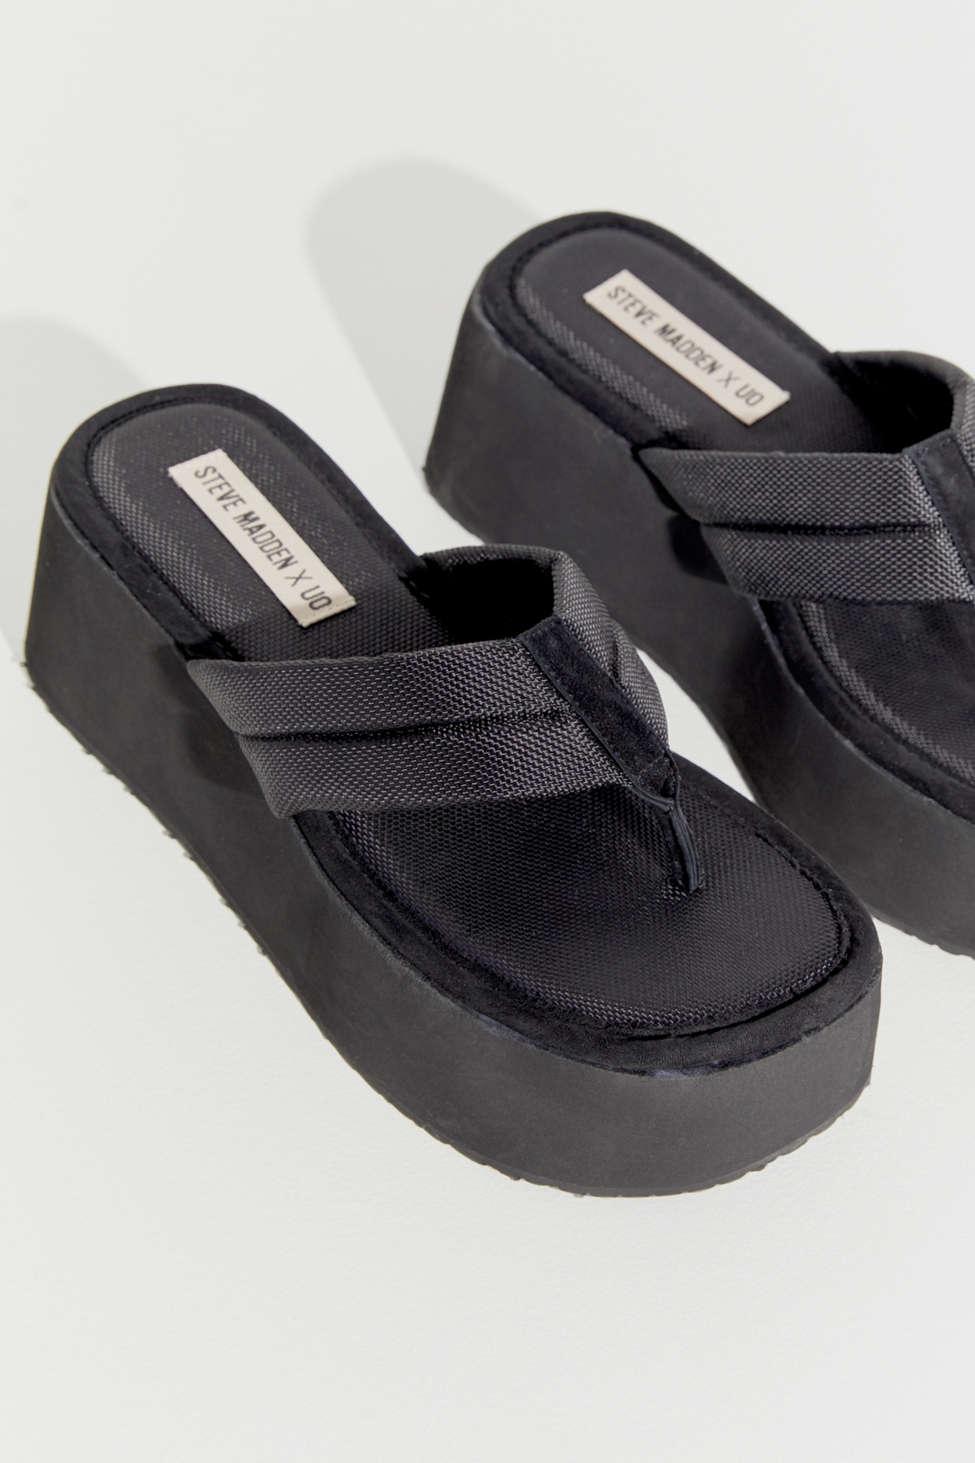 Steve Madden Uo Exclusive Platform Thong Sandal in Black - Lyst